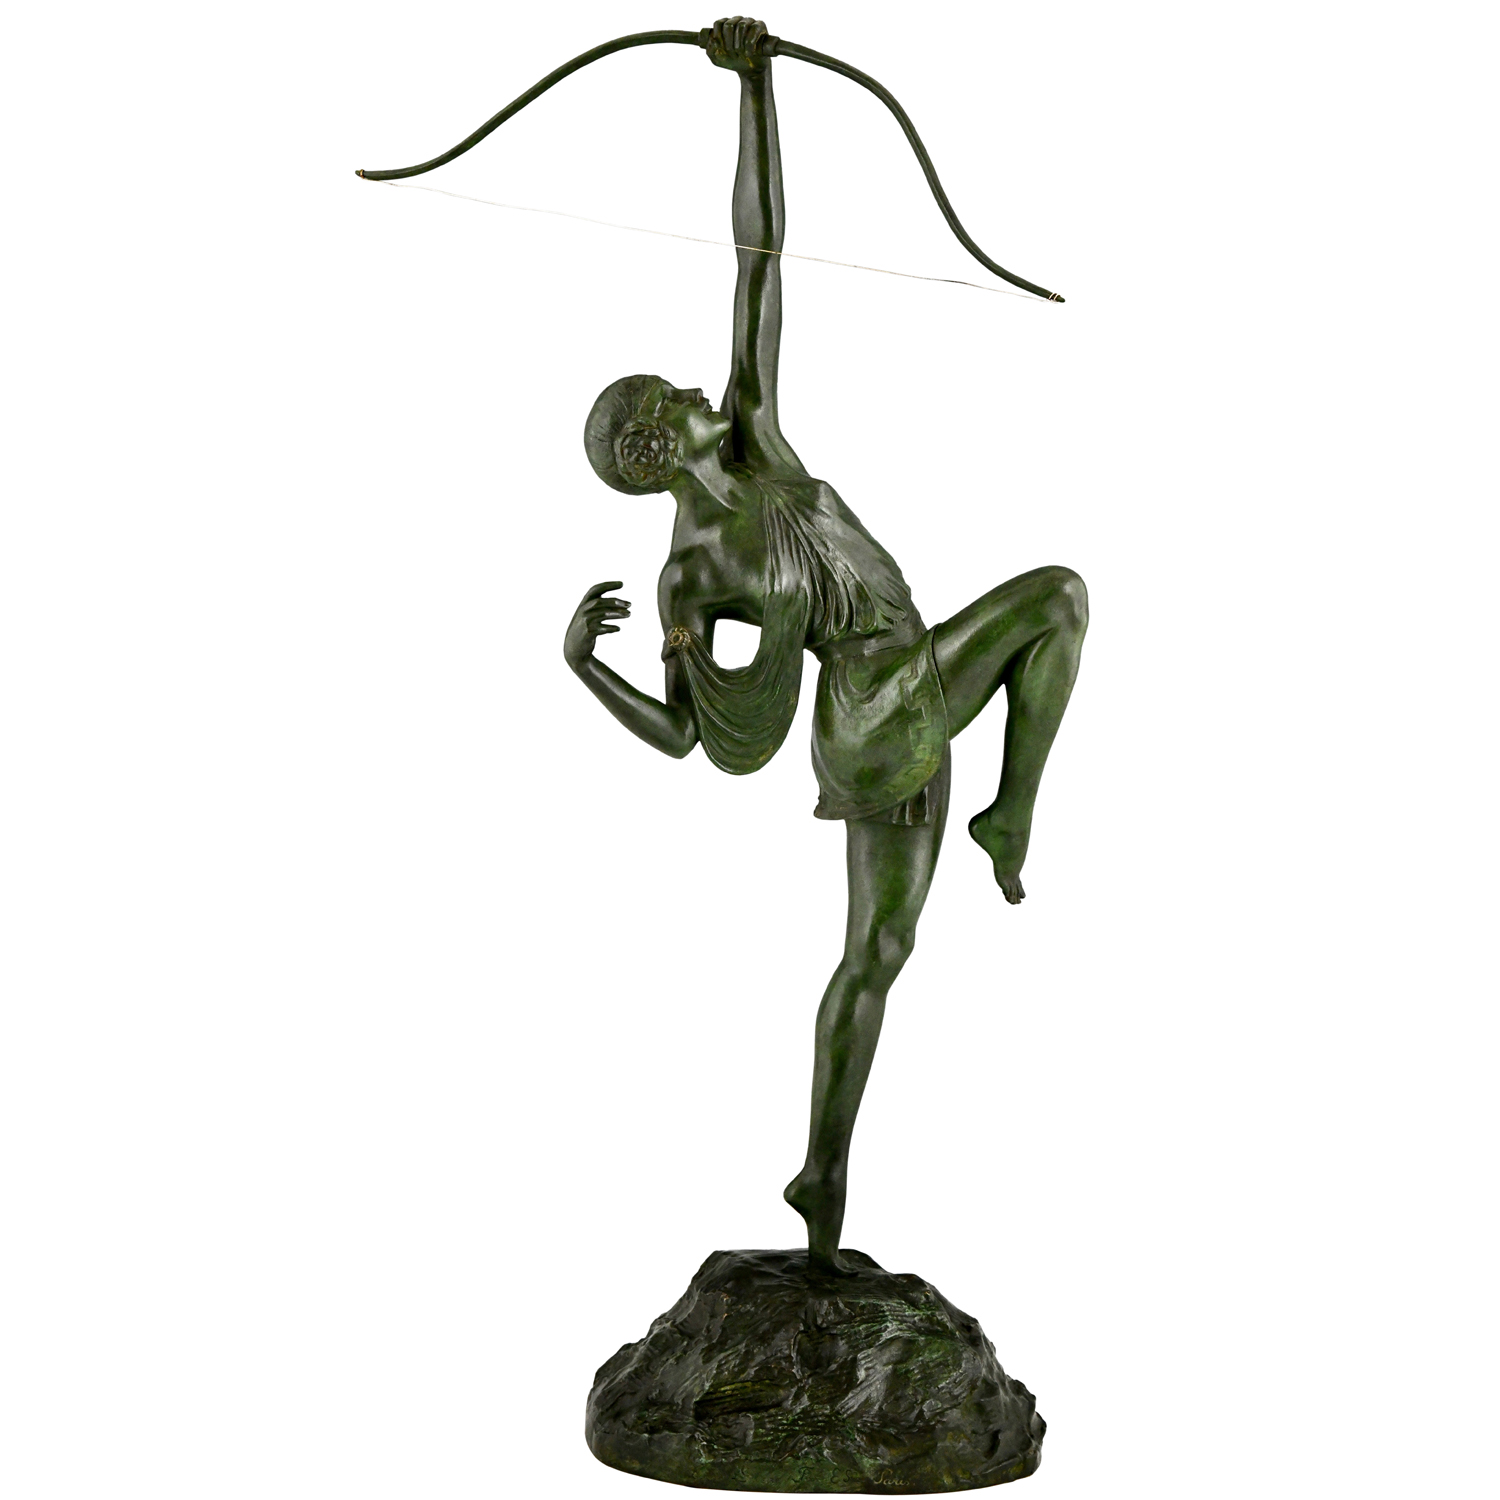 Art Deco bronze sculpture Diana Le Faguays - 1